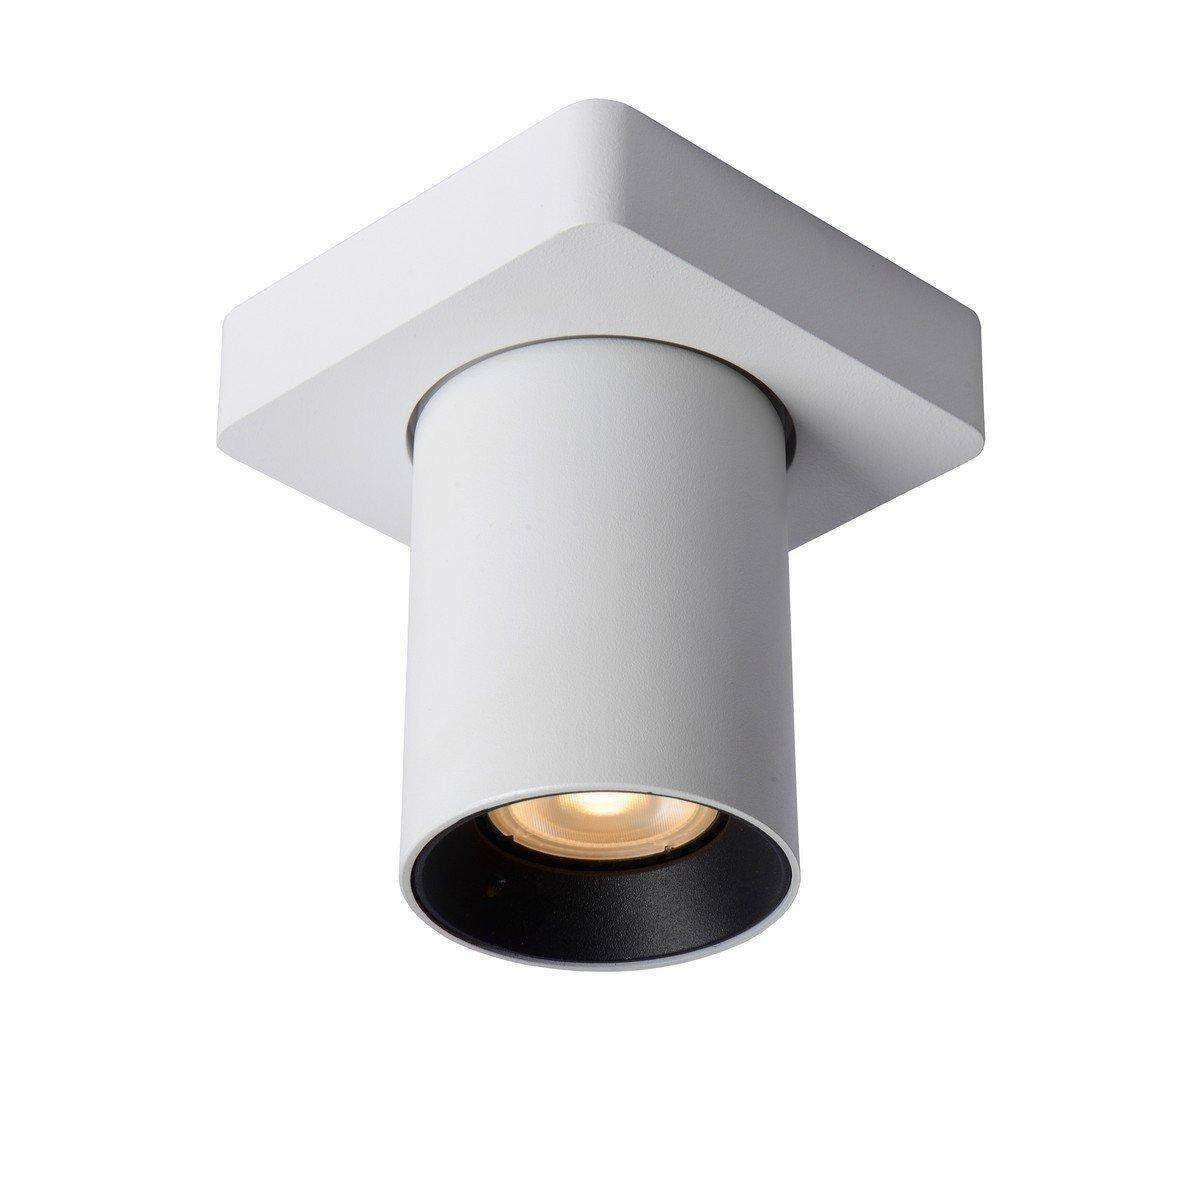 Lucide Nigel Modern Ceiling Spotlight LED Dim to warm GU10 1x5W 2200K3000K White - image 1